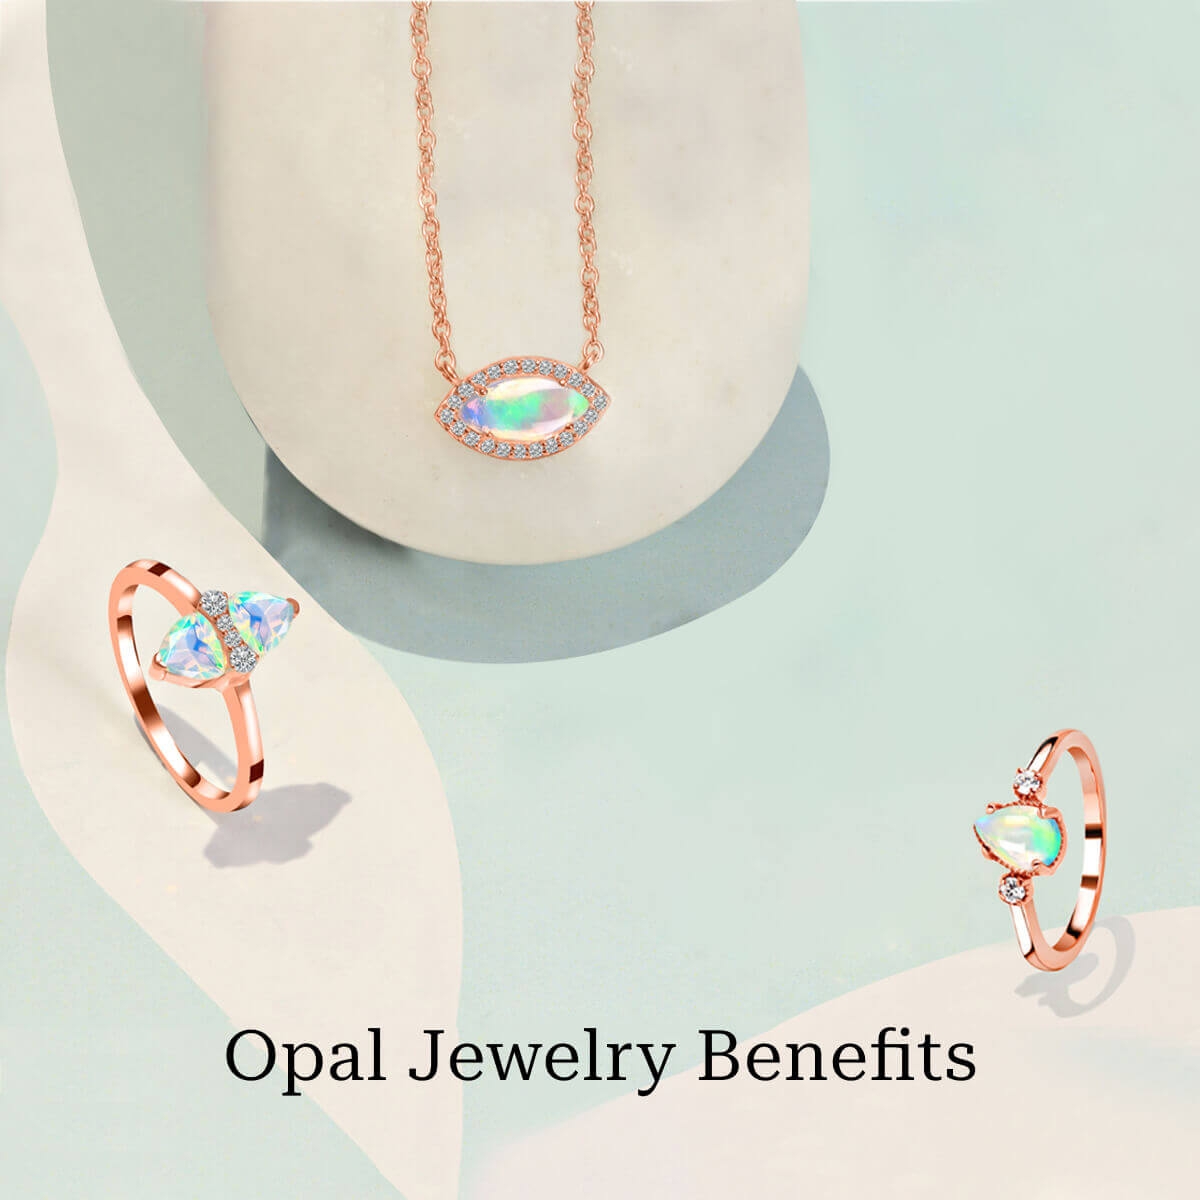 Benefits Of Wearing Opal Jewelry